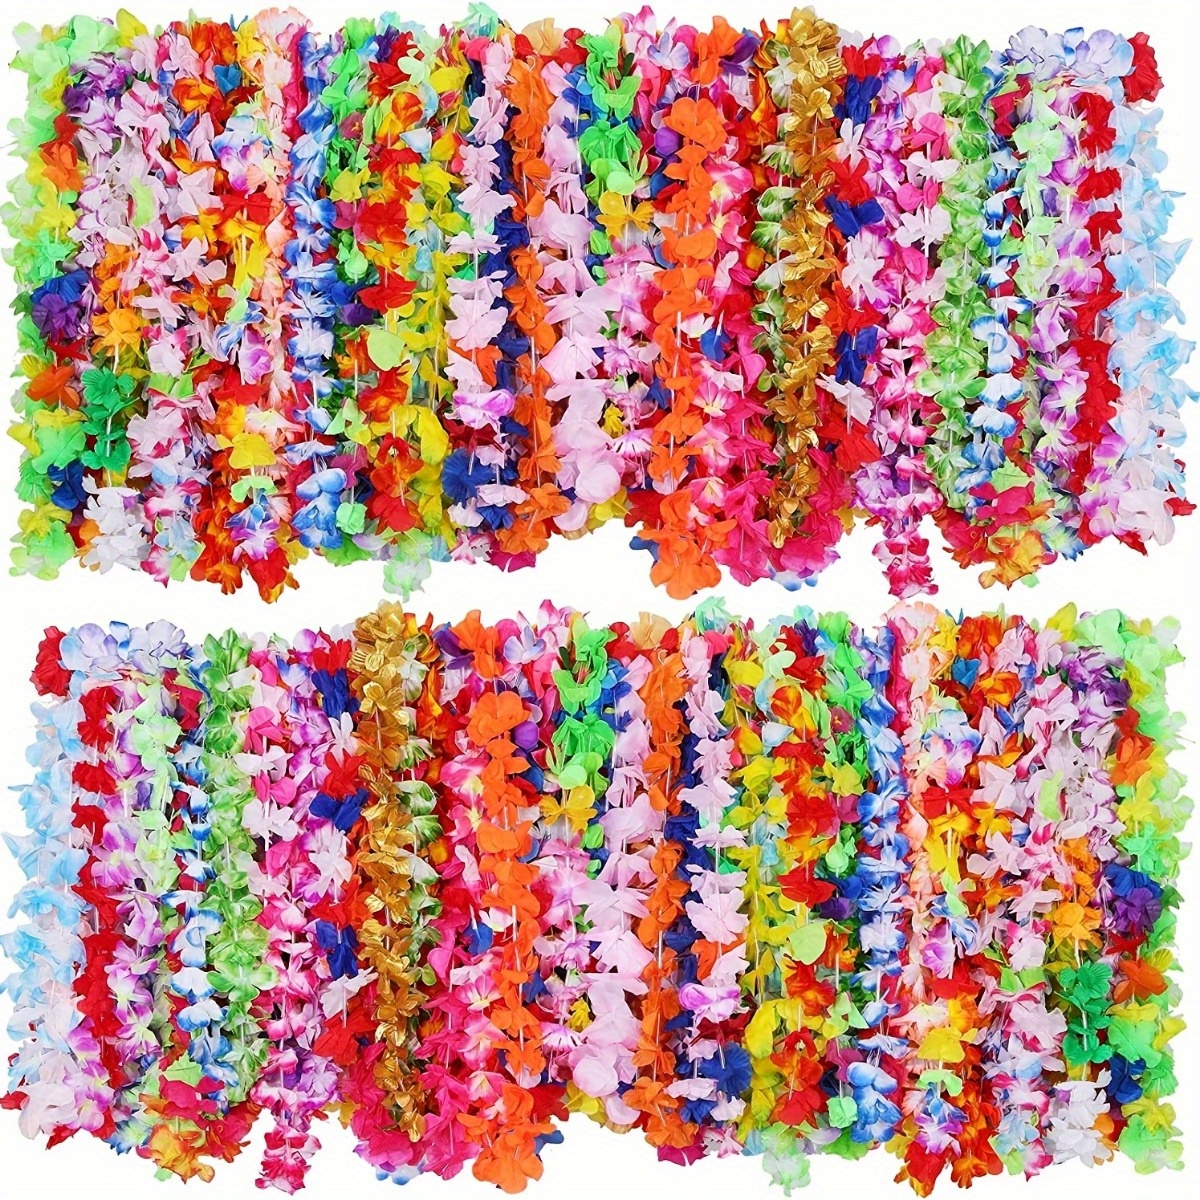 

20pcs, Hawaiian Necklace Tropical Luau Flower Lei Headbands - Party Favors, Wedding Decorations, Beach Birthday Supplies